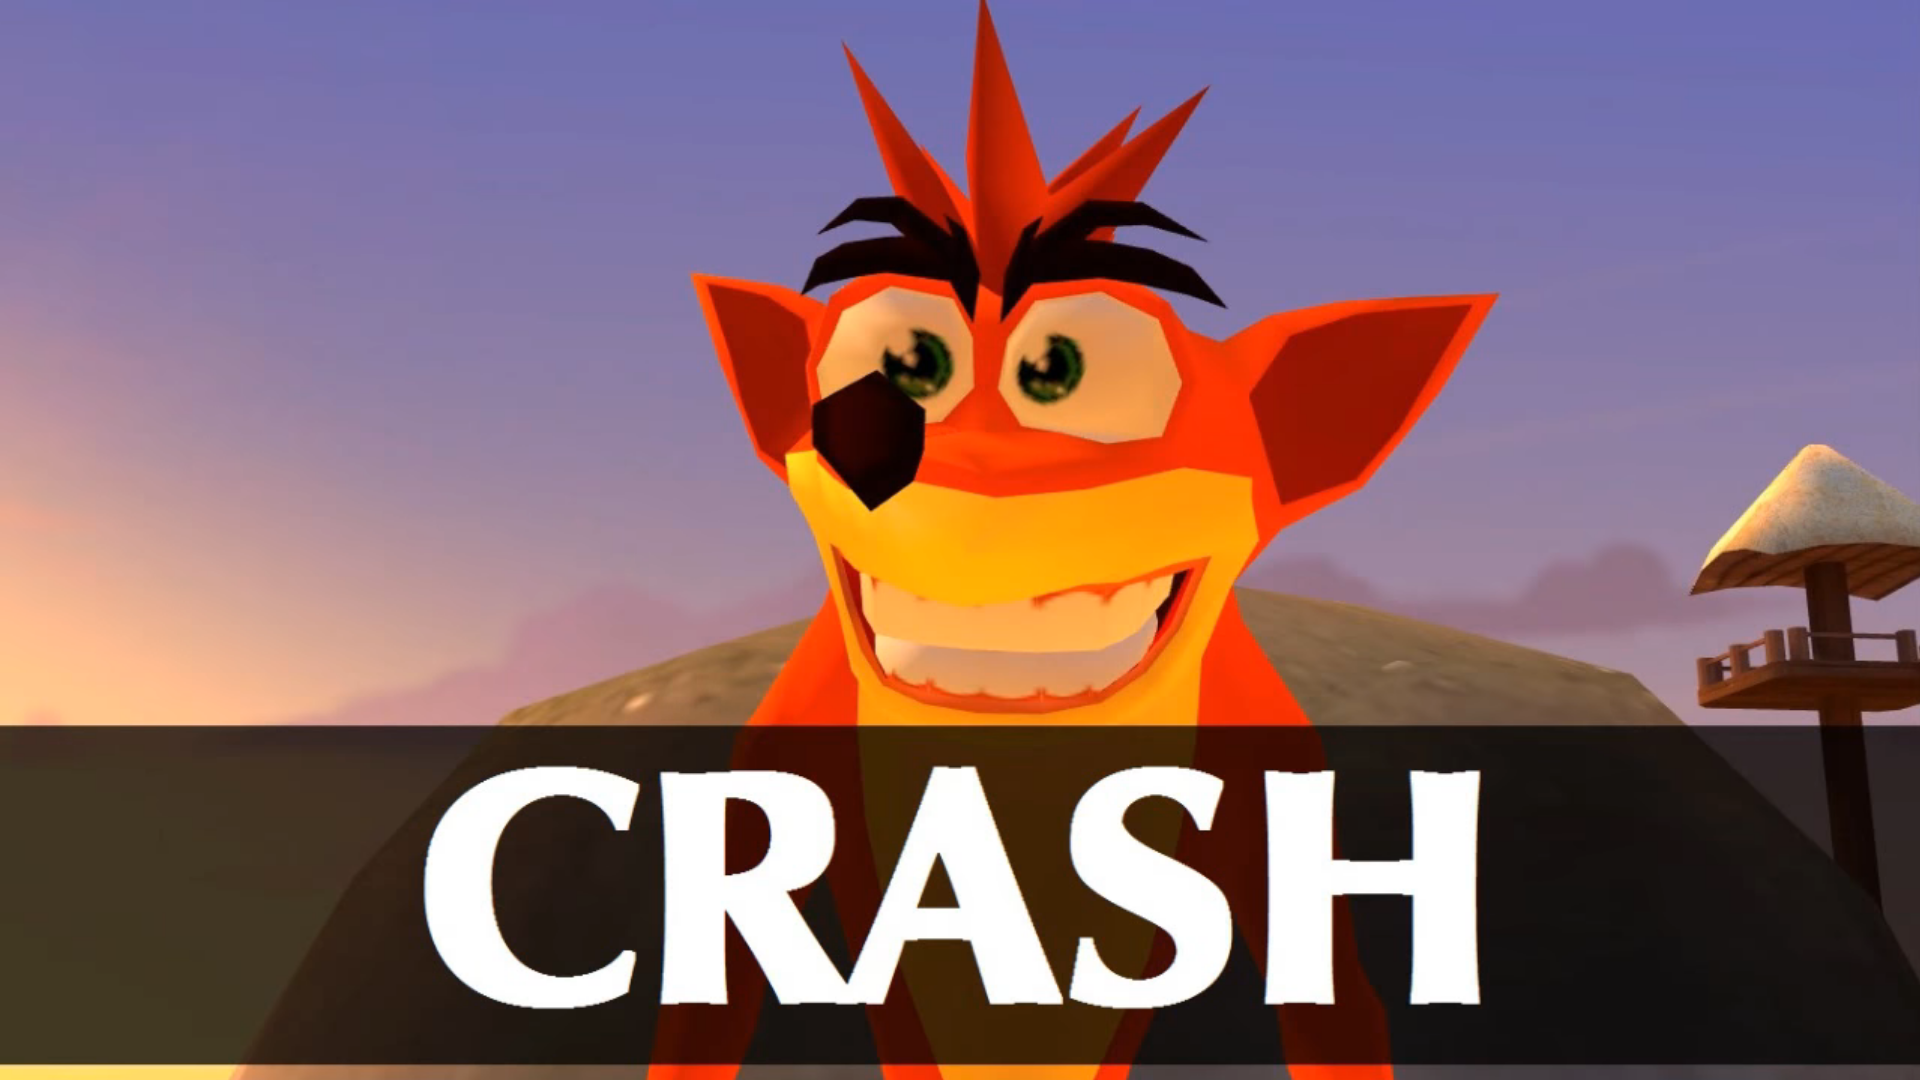 Crash Bandicoot beats Mario: Read the 7 Reasons